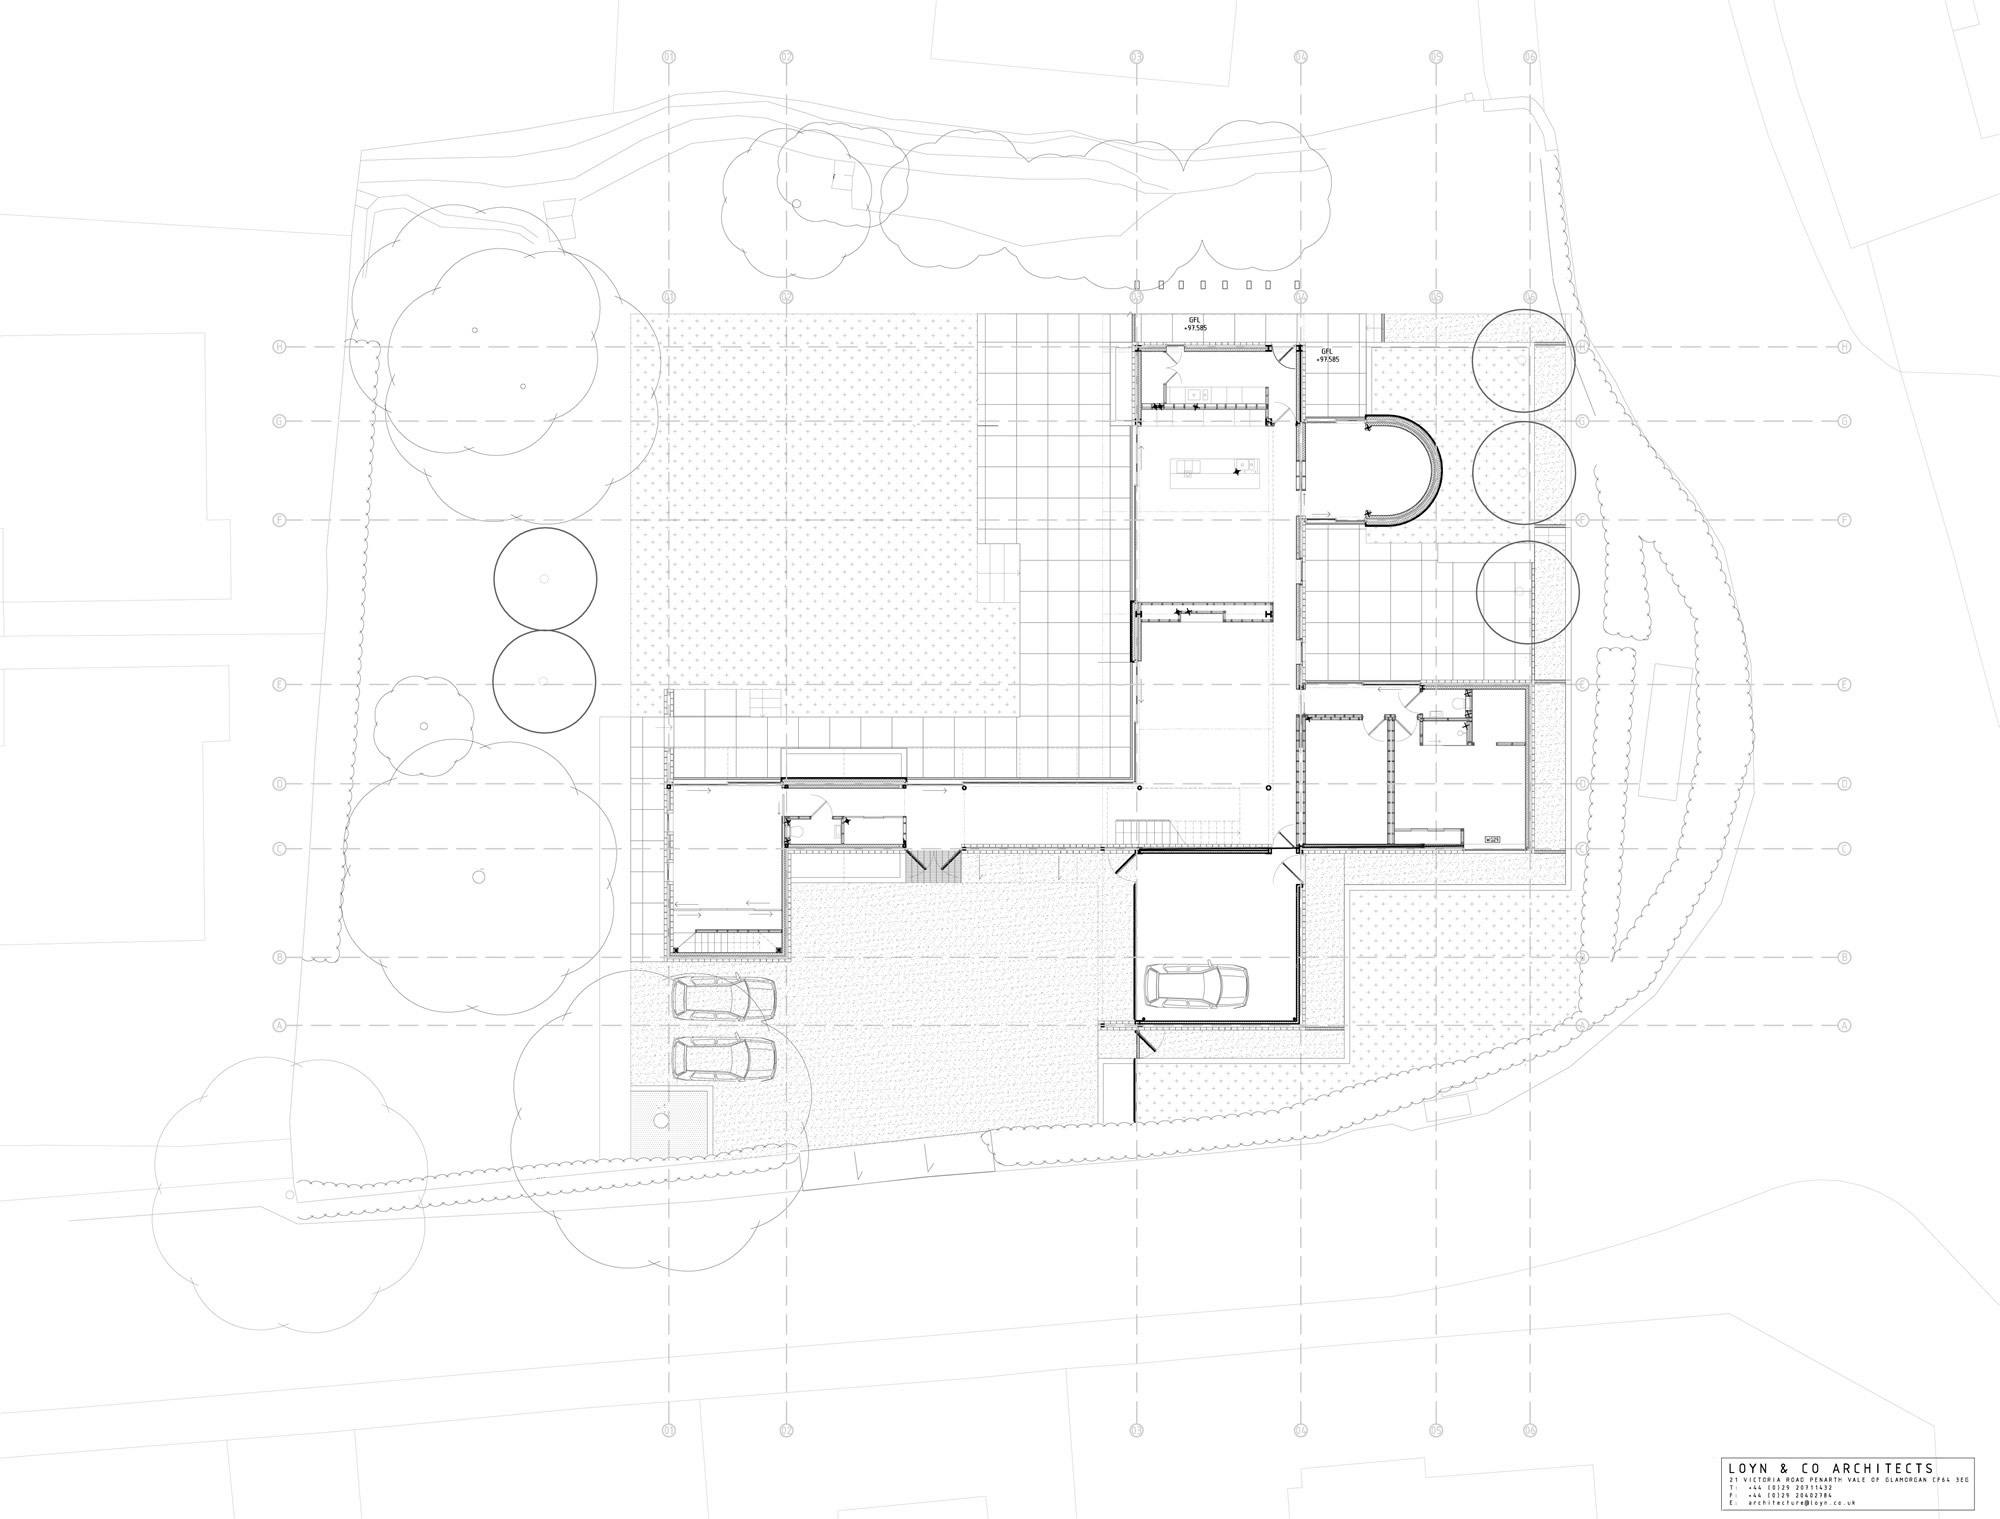 millbrook-house-drawing-05.jpg